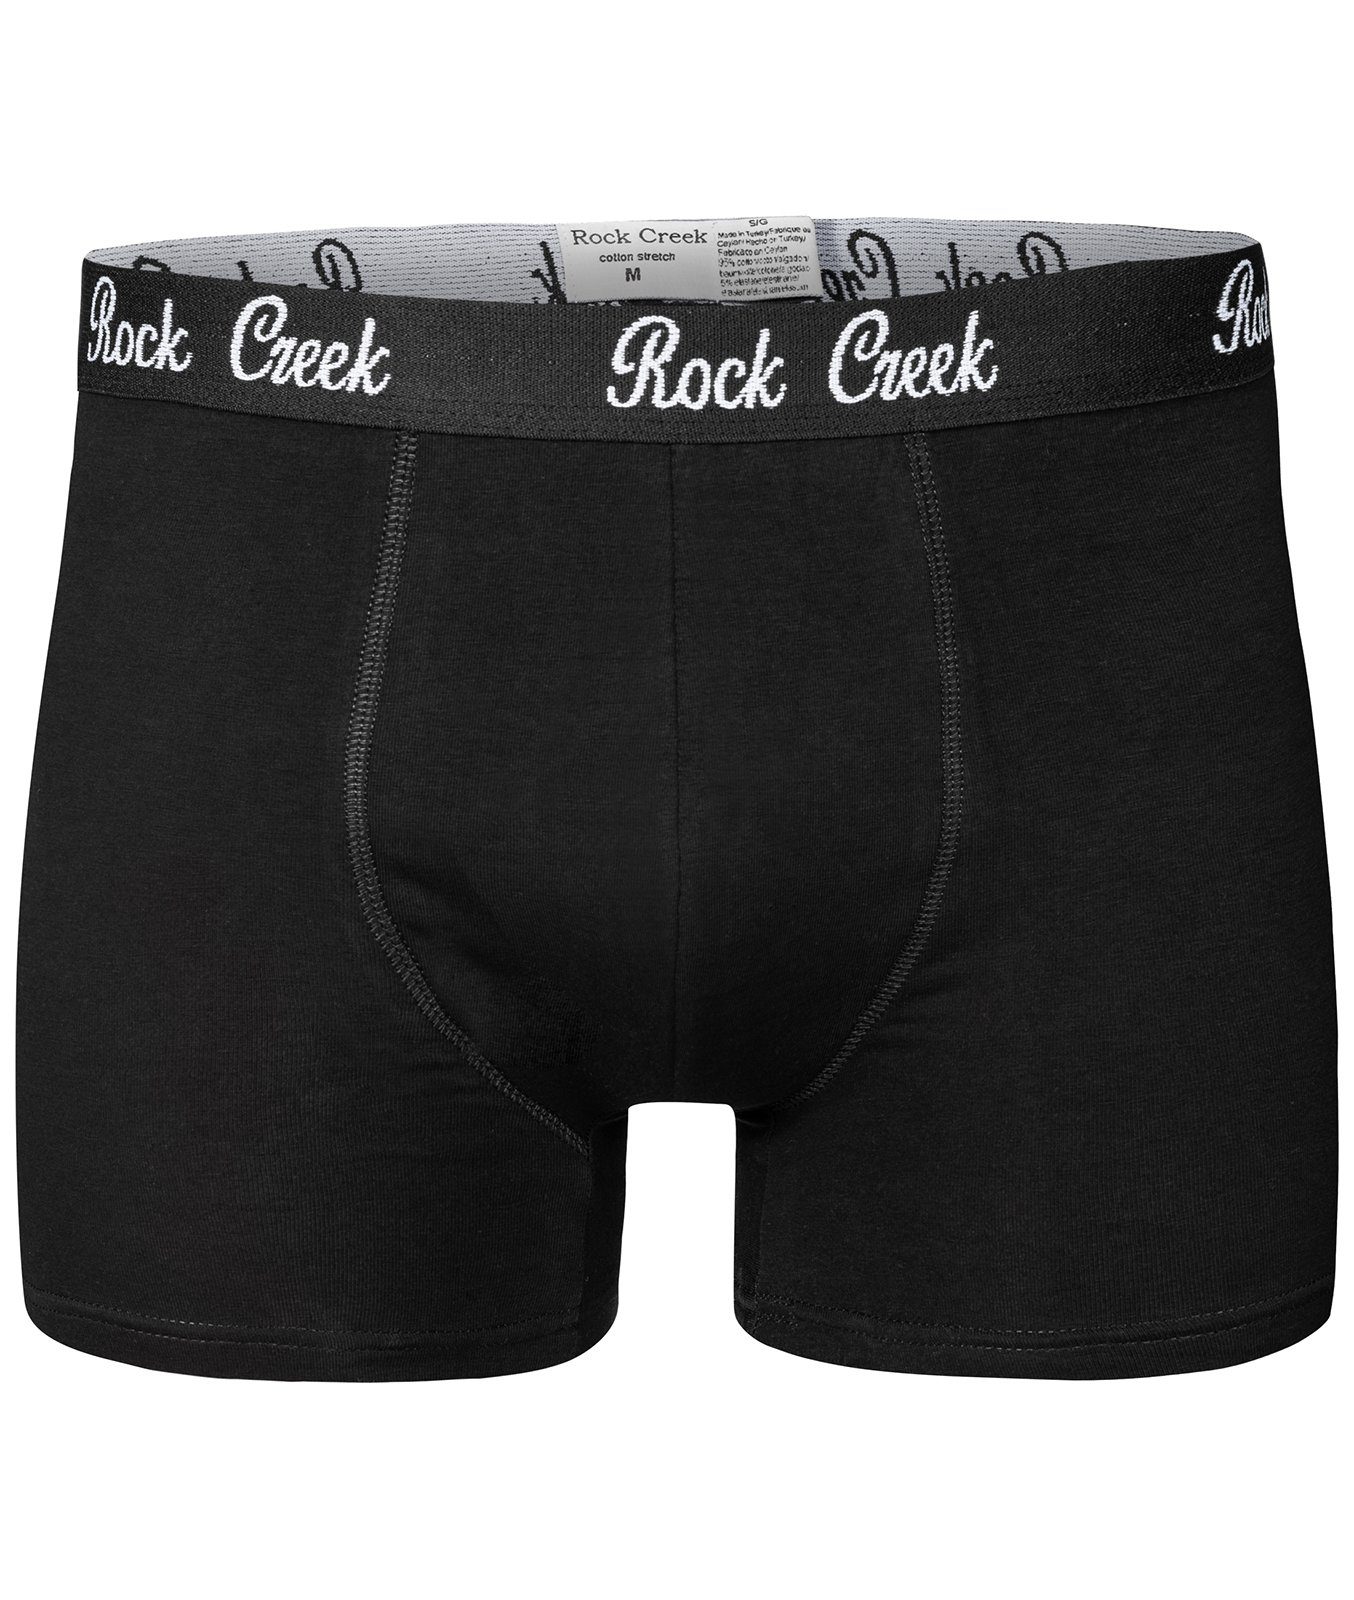 rot grau Boxershorts schwarz weiß Herren | | dunkelblau | | Set blau Boxershorts (8er-Set) | Creek 8er Rock H-218